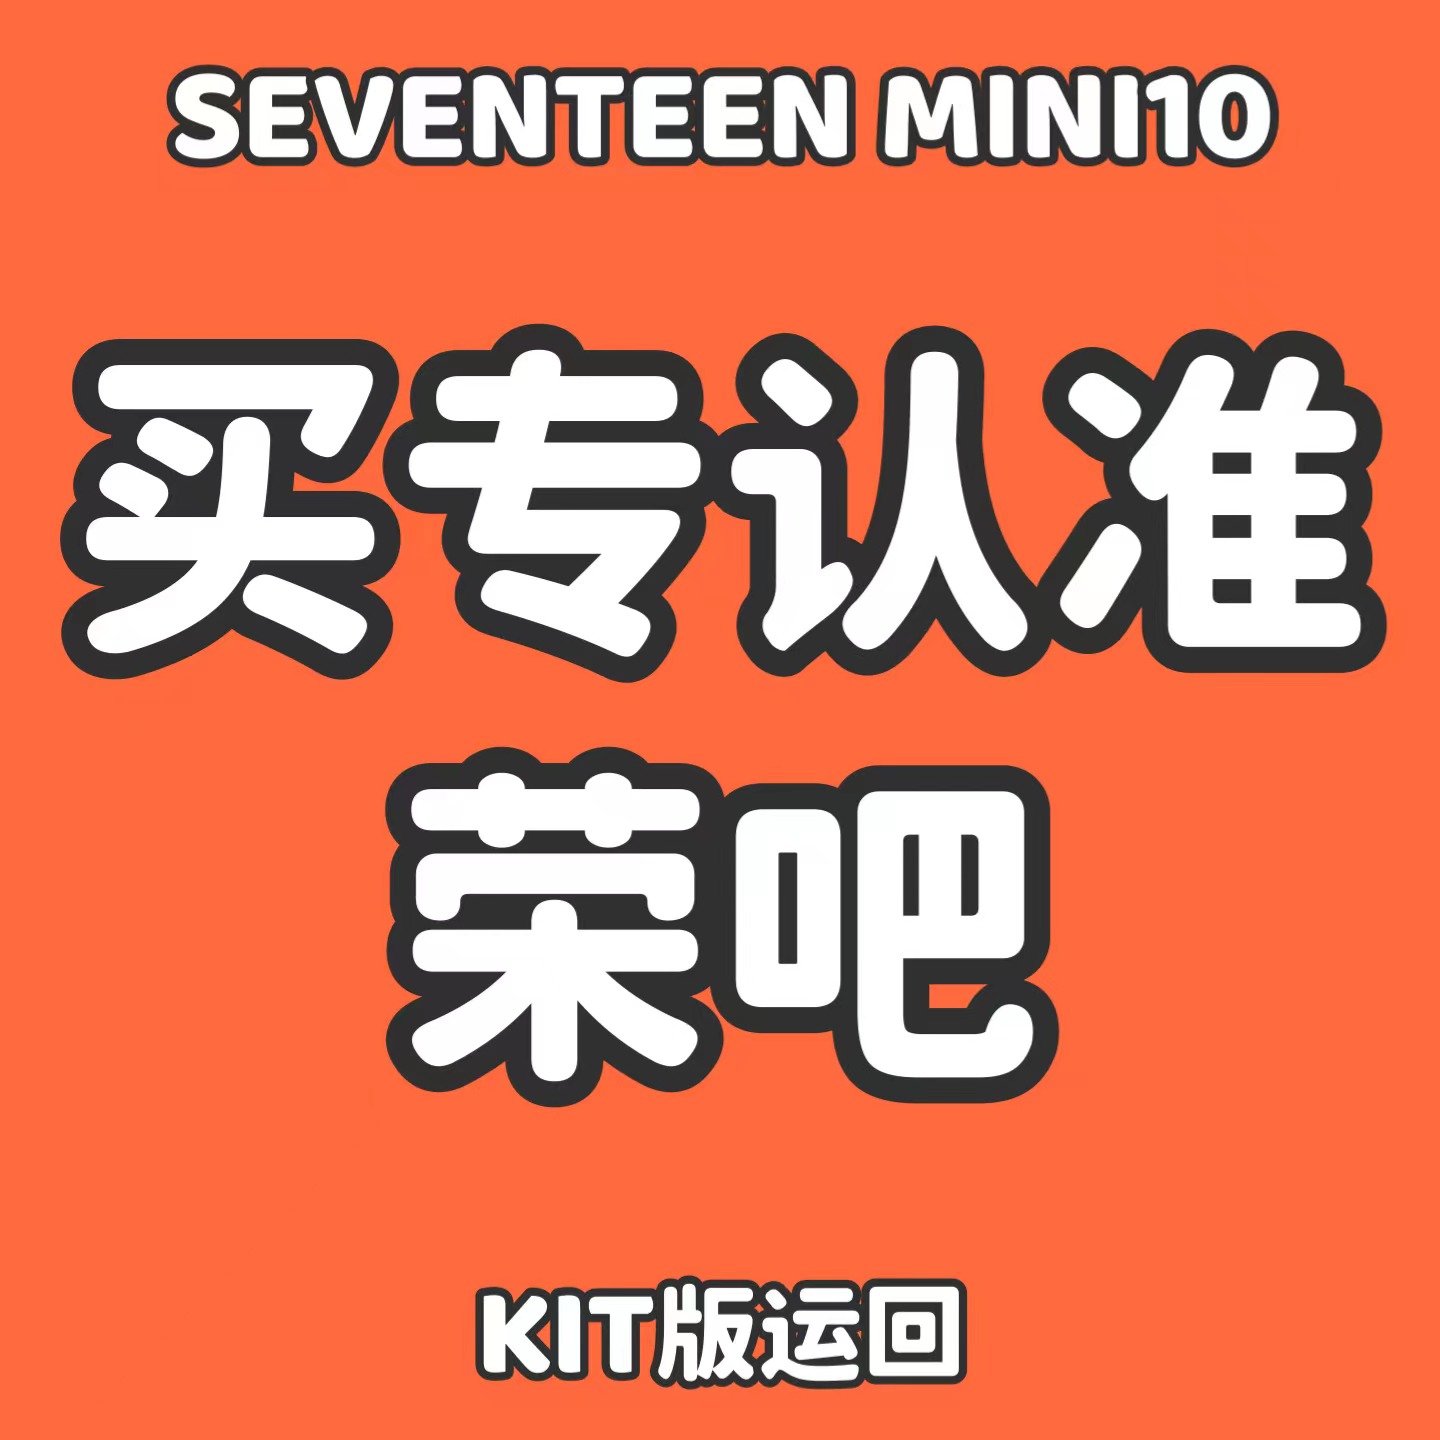 cn.ktown4u.com : [全款裸专] *备注微店注册手机号SEVENTEEN - 迷你10 